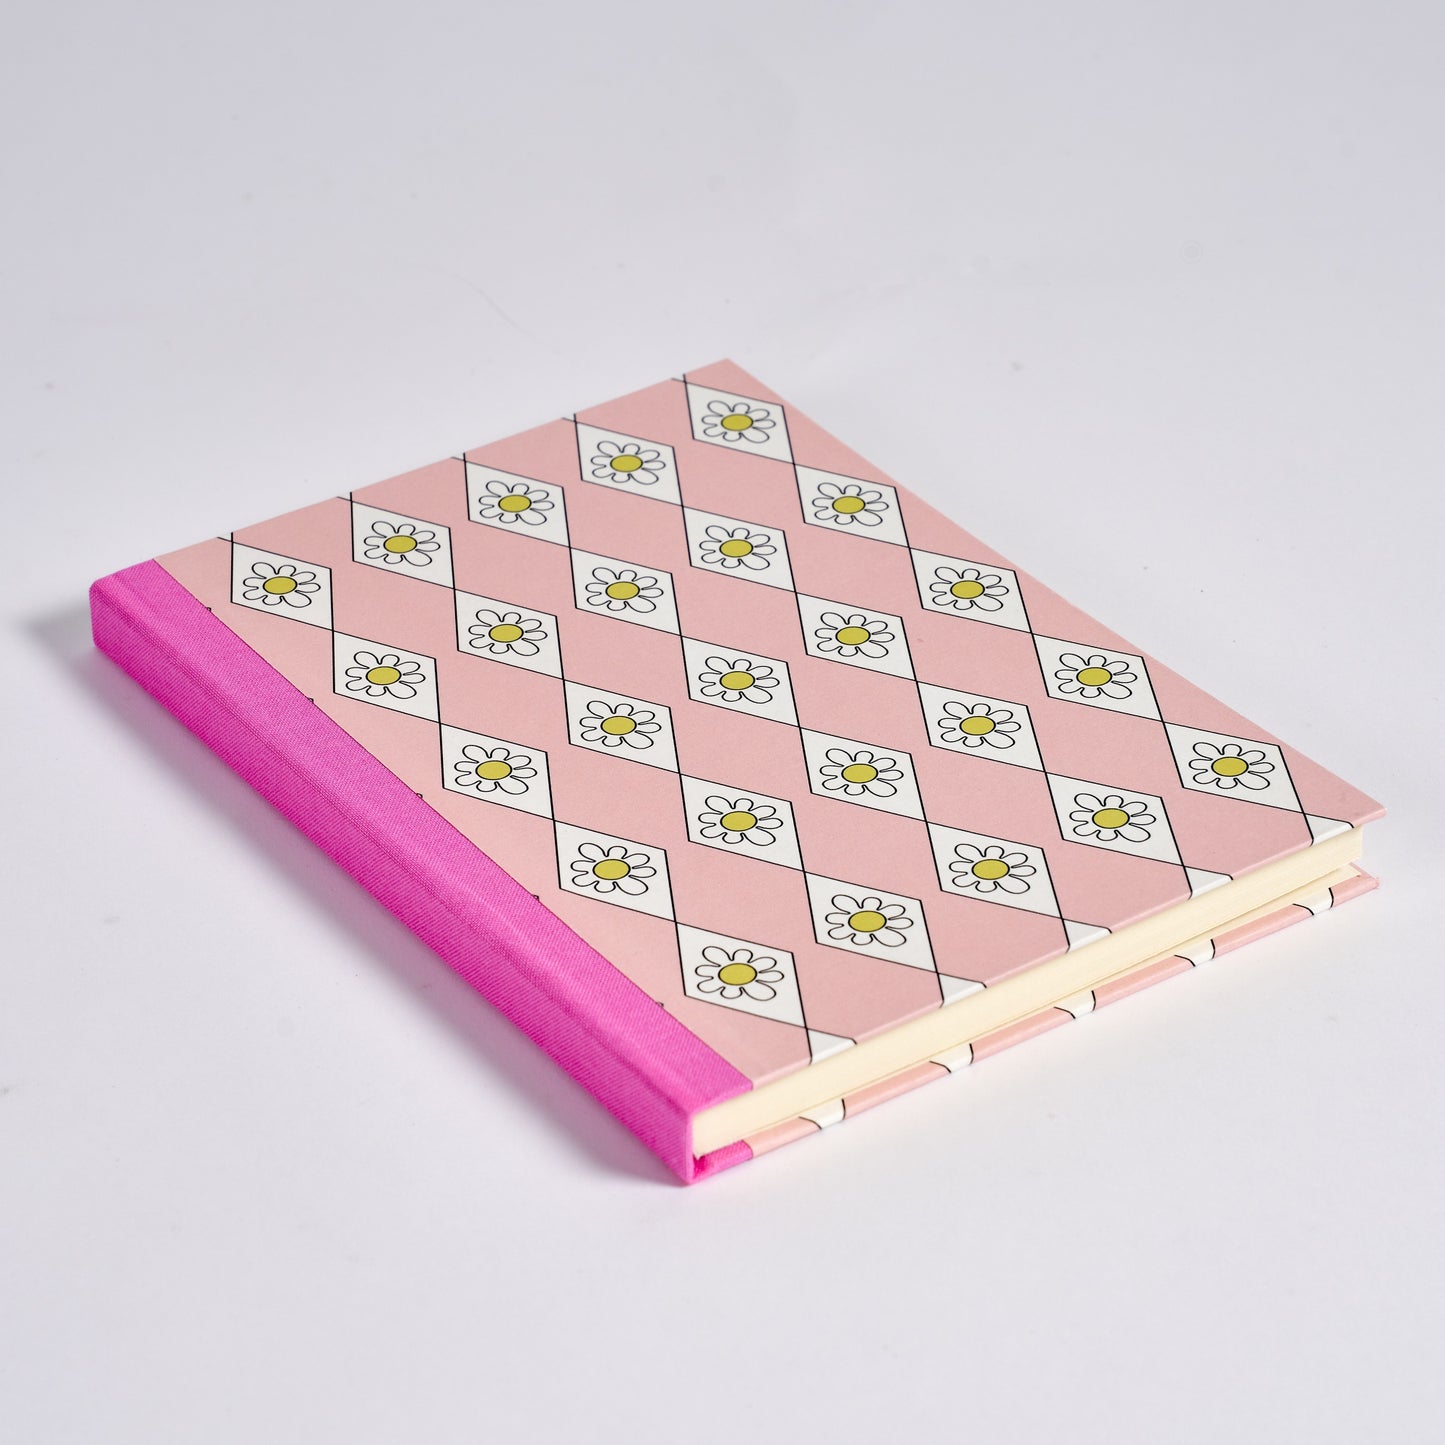 A5 Hardcover Notebook Pink Diamond Daisy - Pink